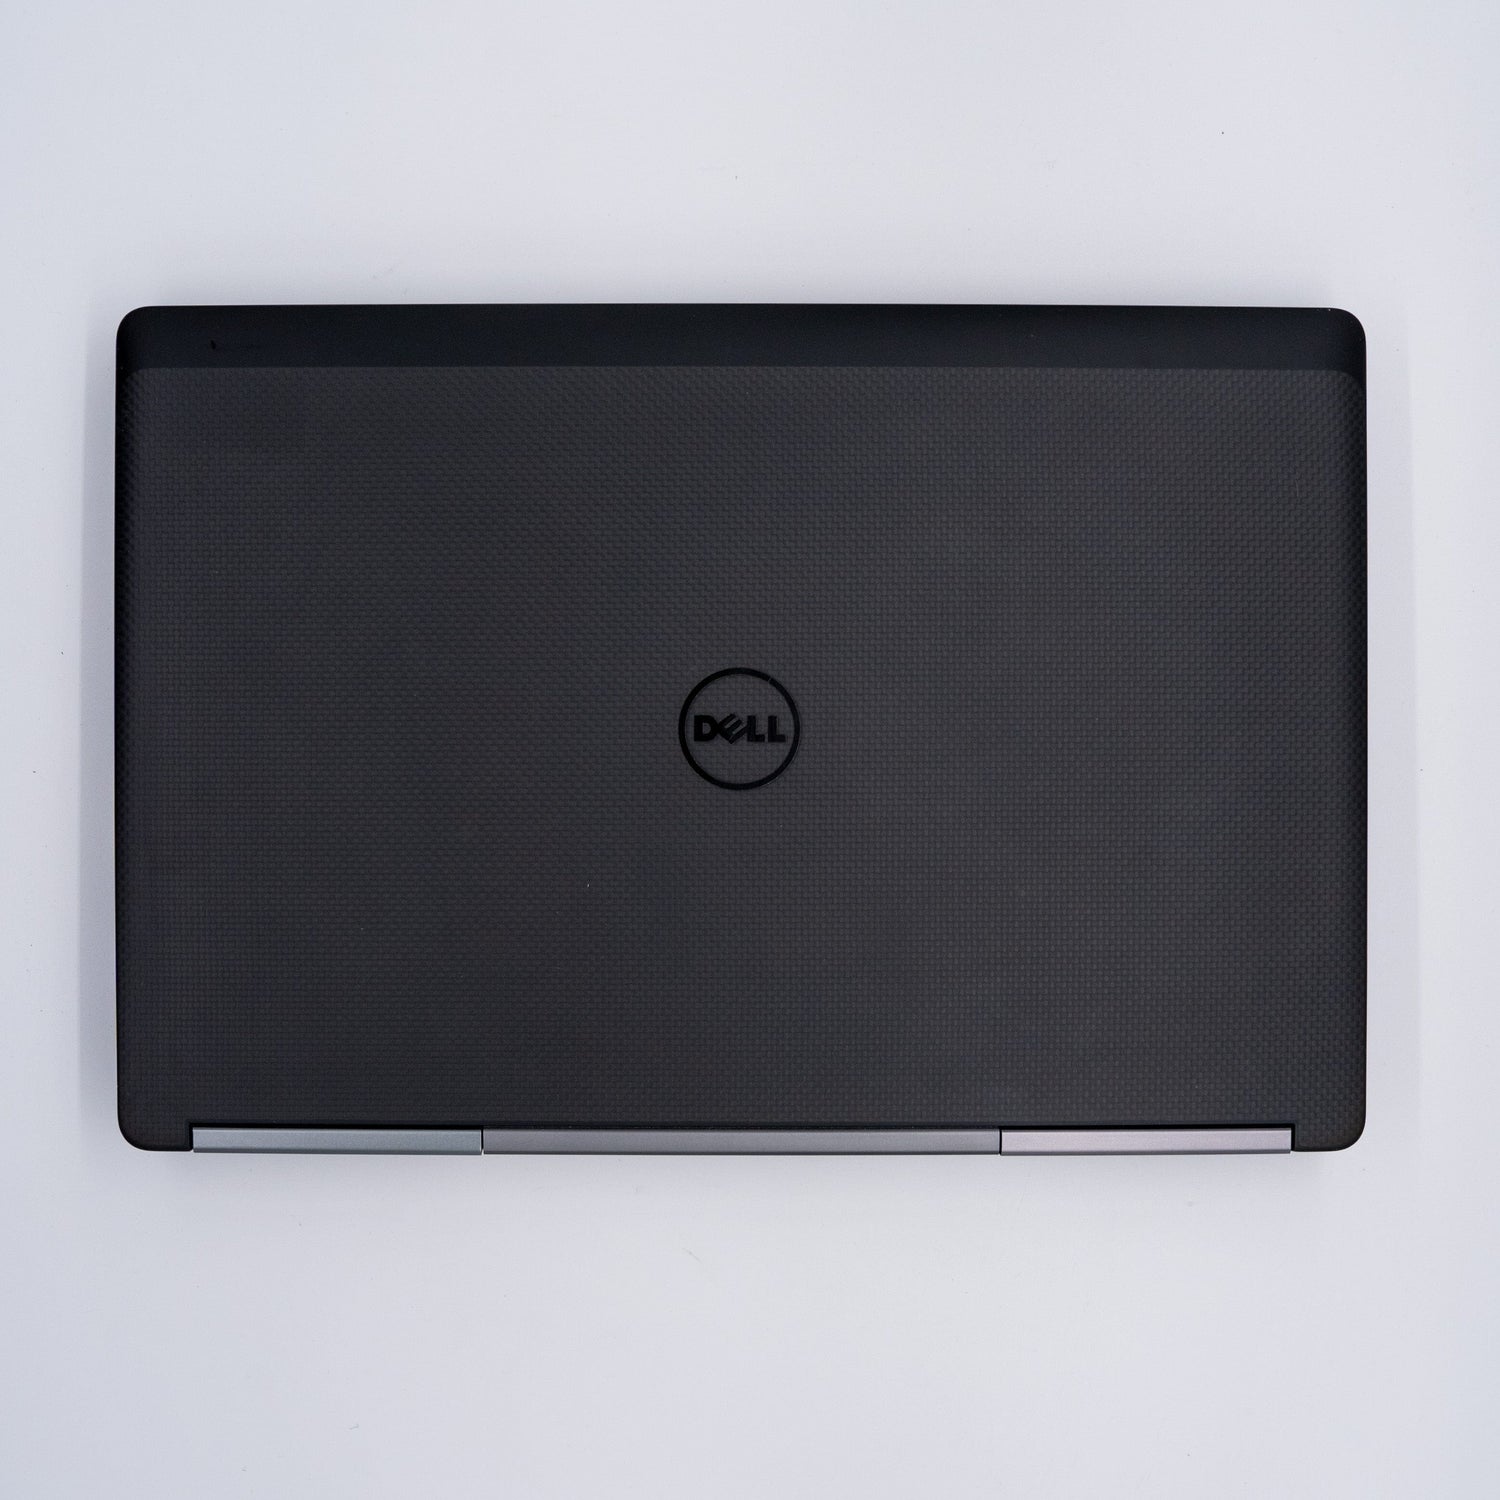 Dell Precision 7710 Intel i7-6820HQ 32GB DDR4 512GB SSD NVIDIA M4000M Laptops Notebook-Pro 